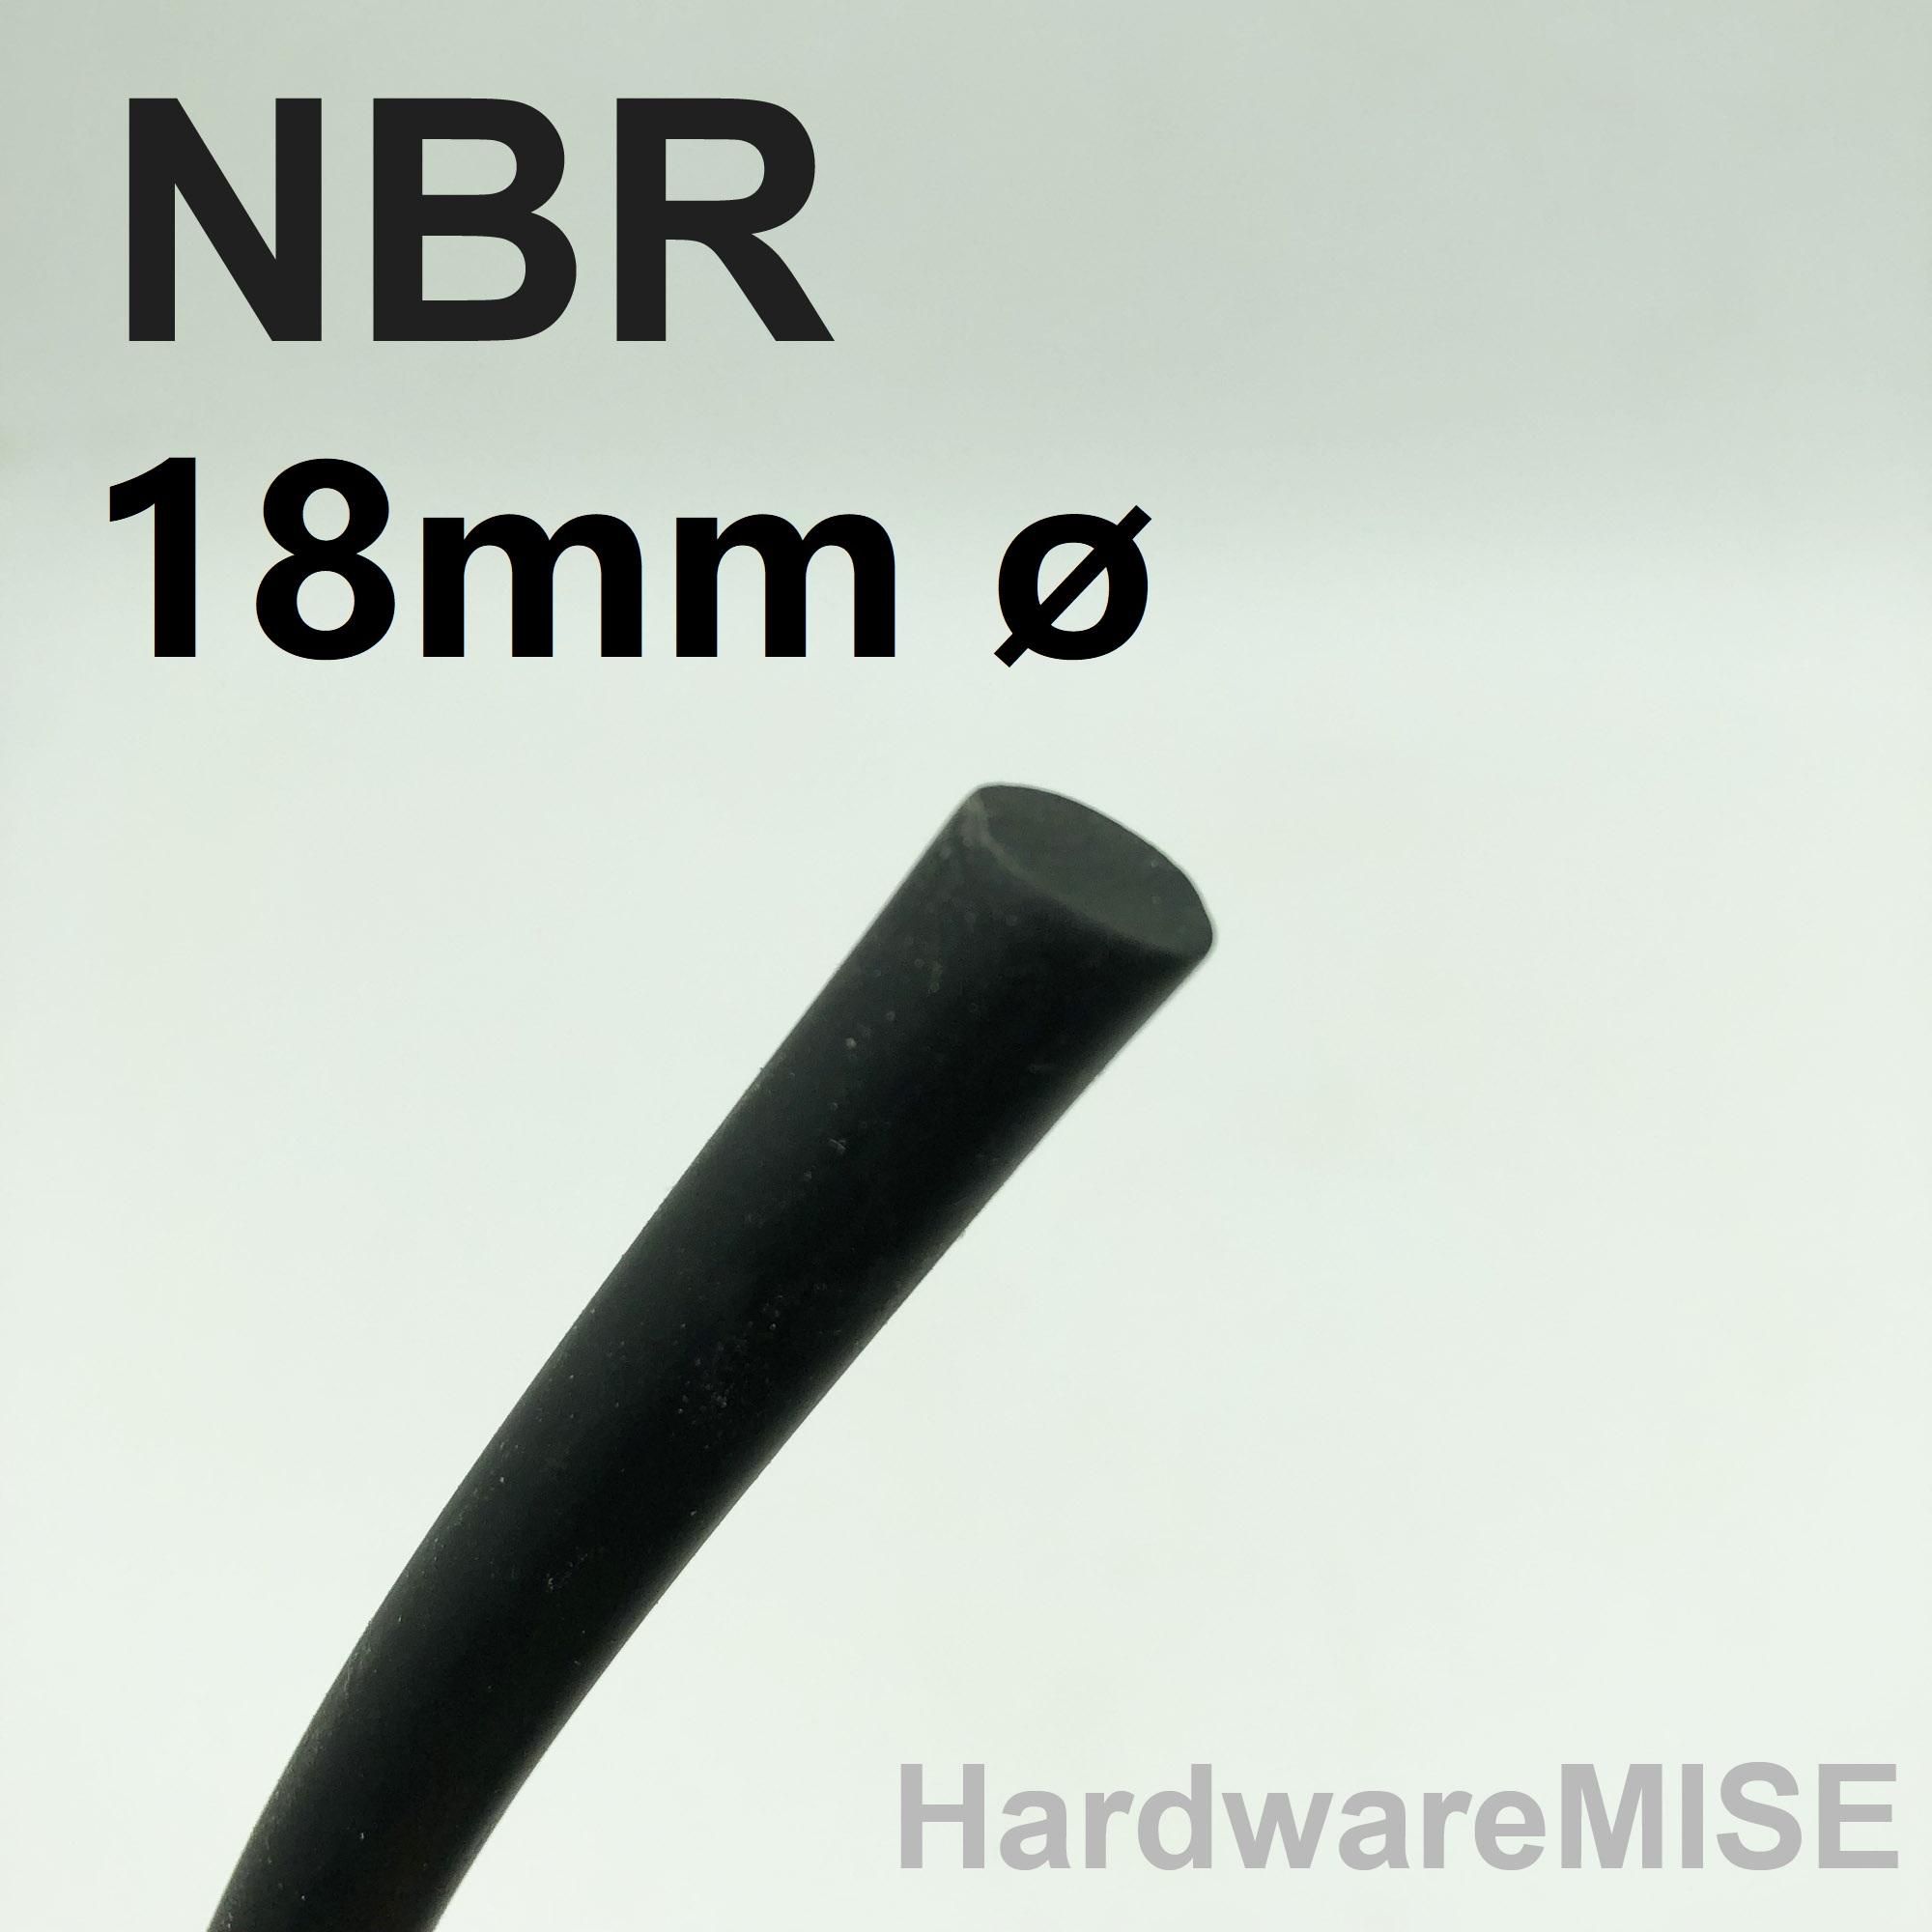 Hardwaremise NBR Cord 18mm ø Buna-N O-Ring Cord Nitrile Rubber Round